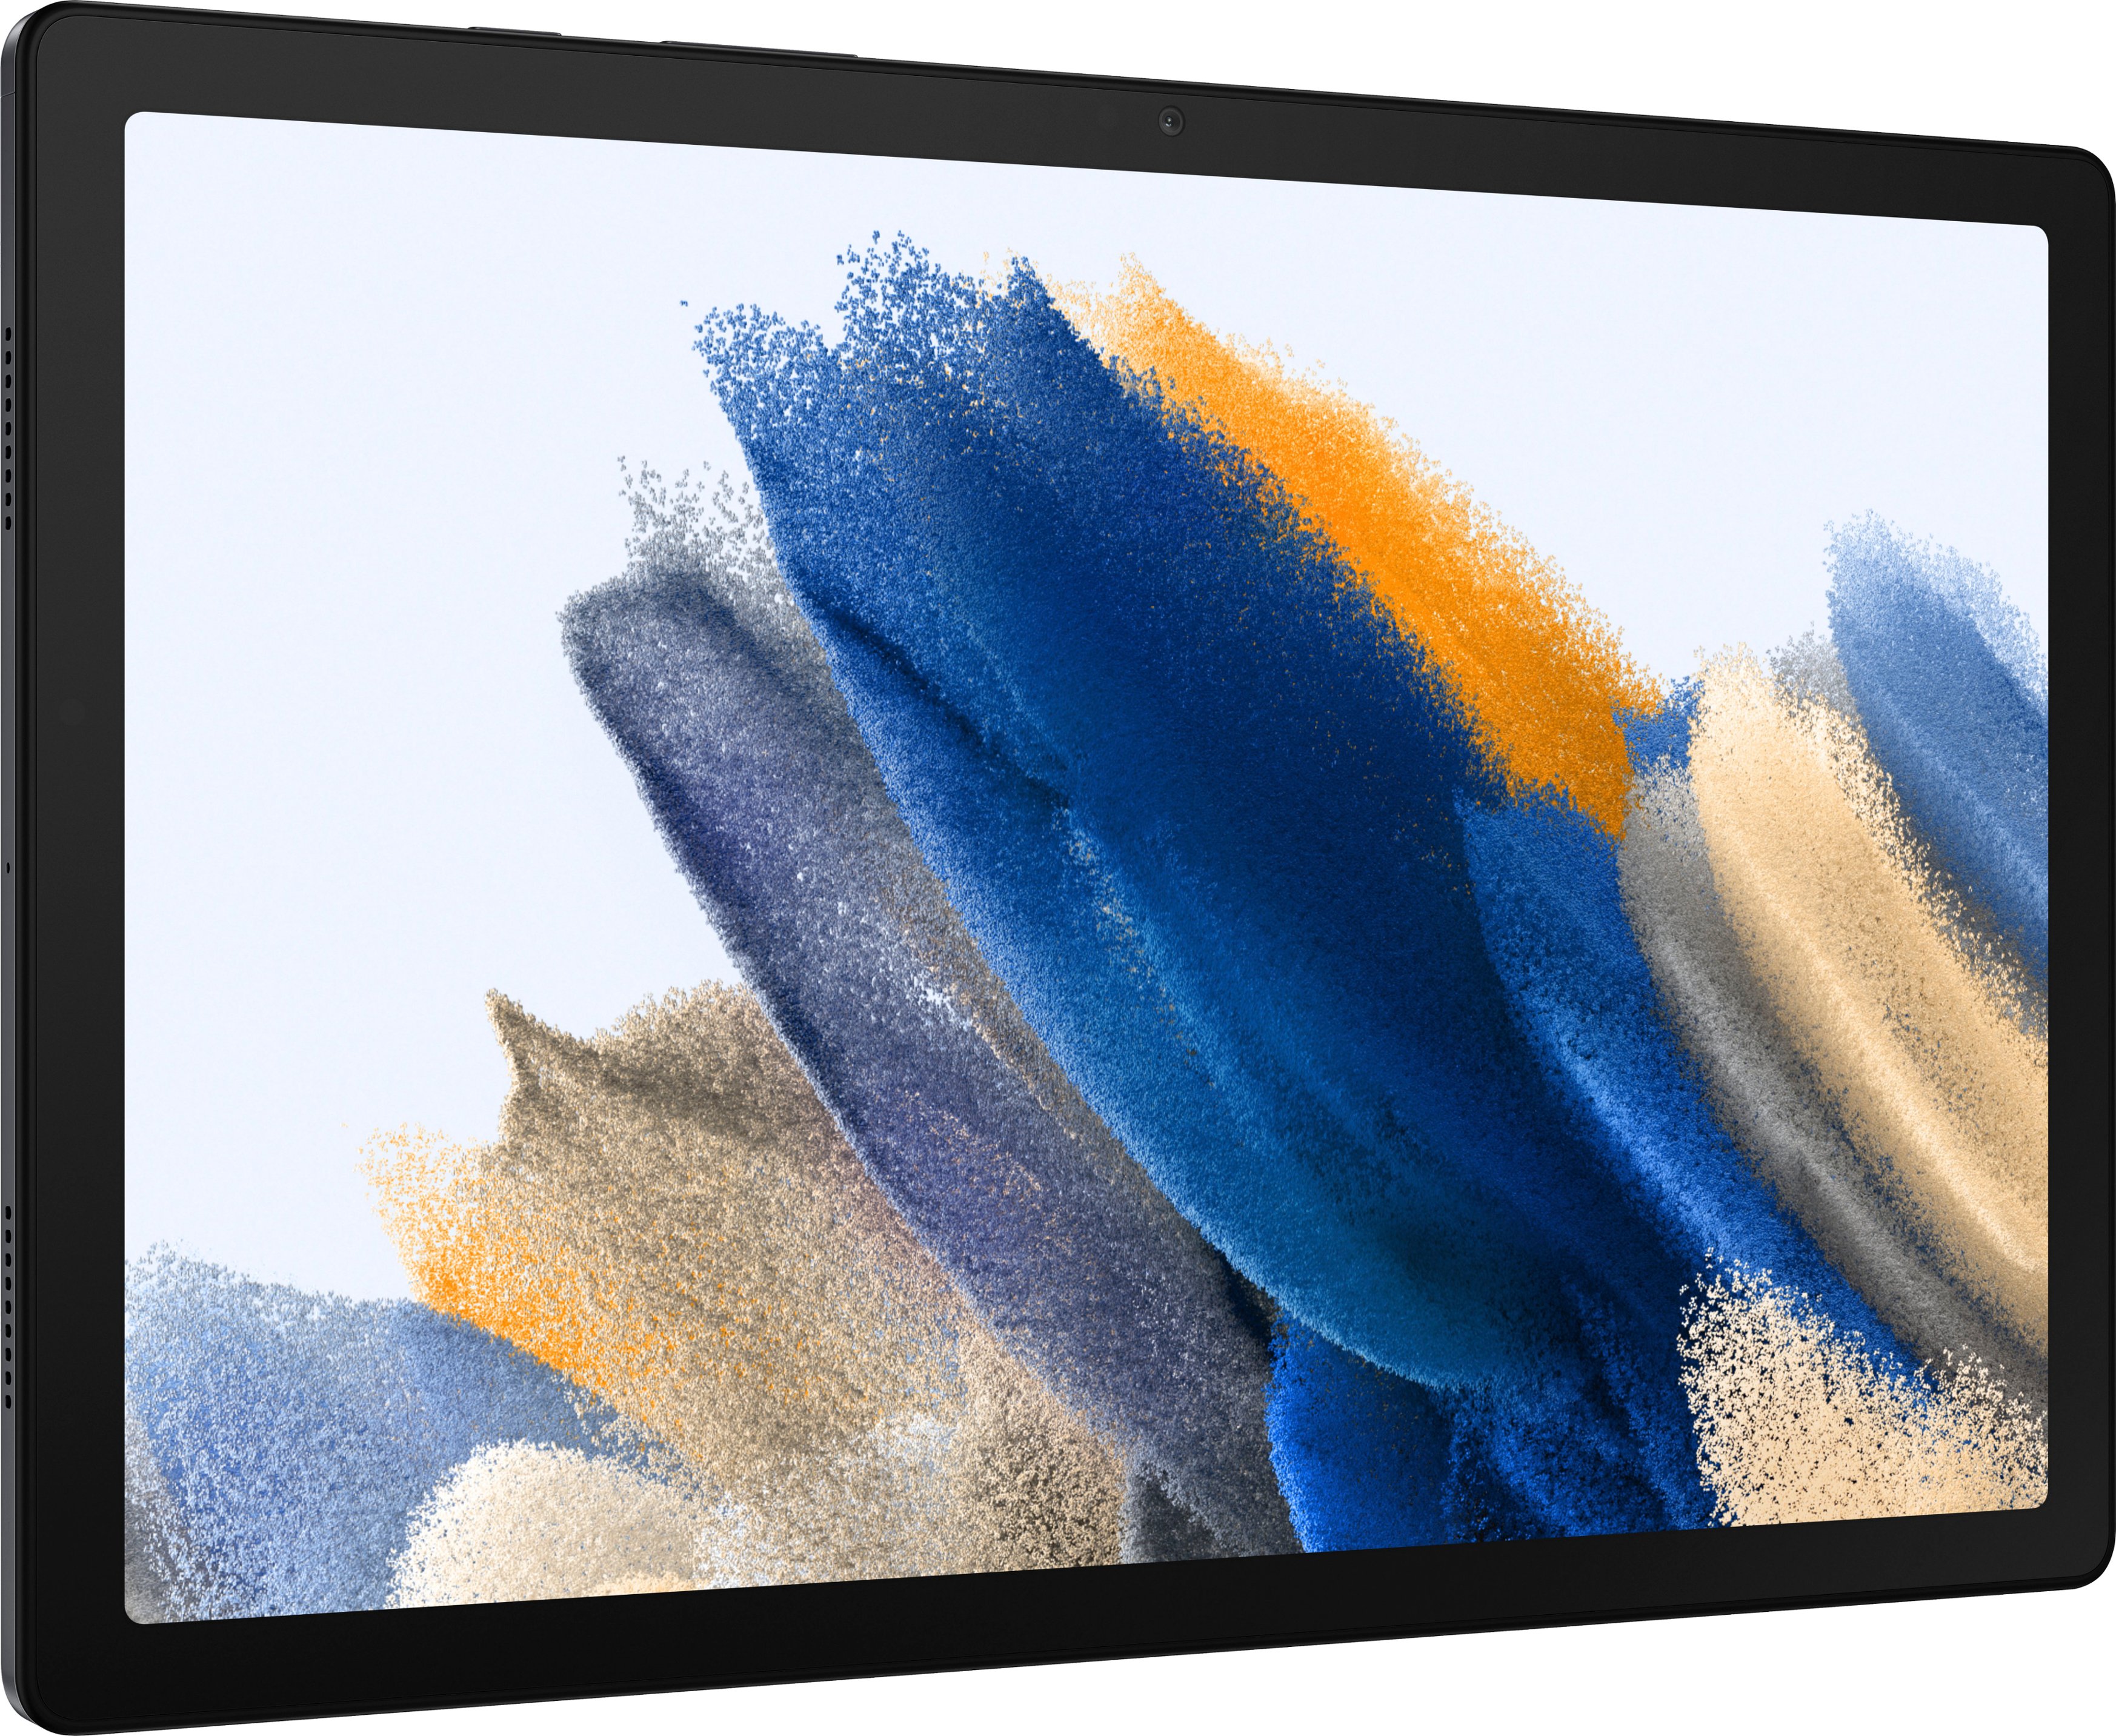 Left View: Samsung - Galaxy Tab S7 Plus - 12.4” - 256GB - With S Pen - Wi-Fi - Mystic Black